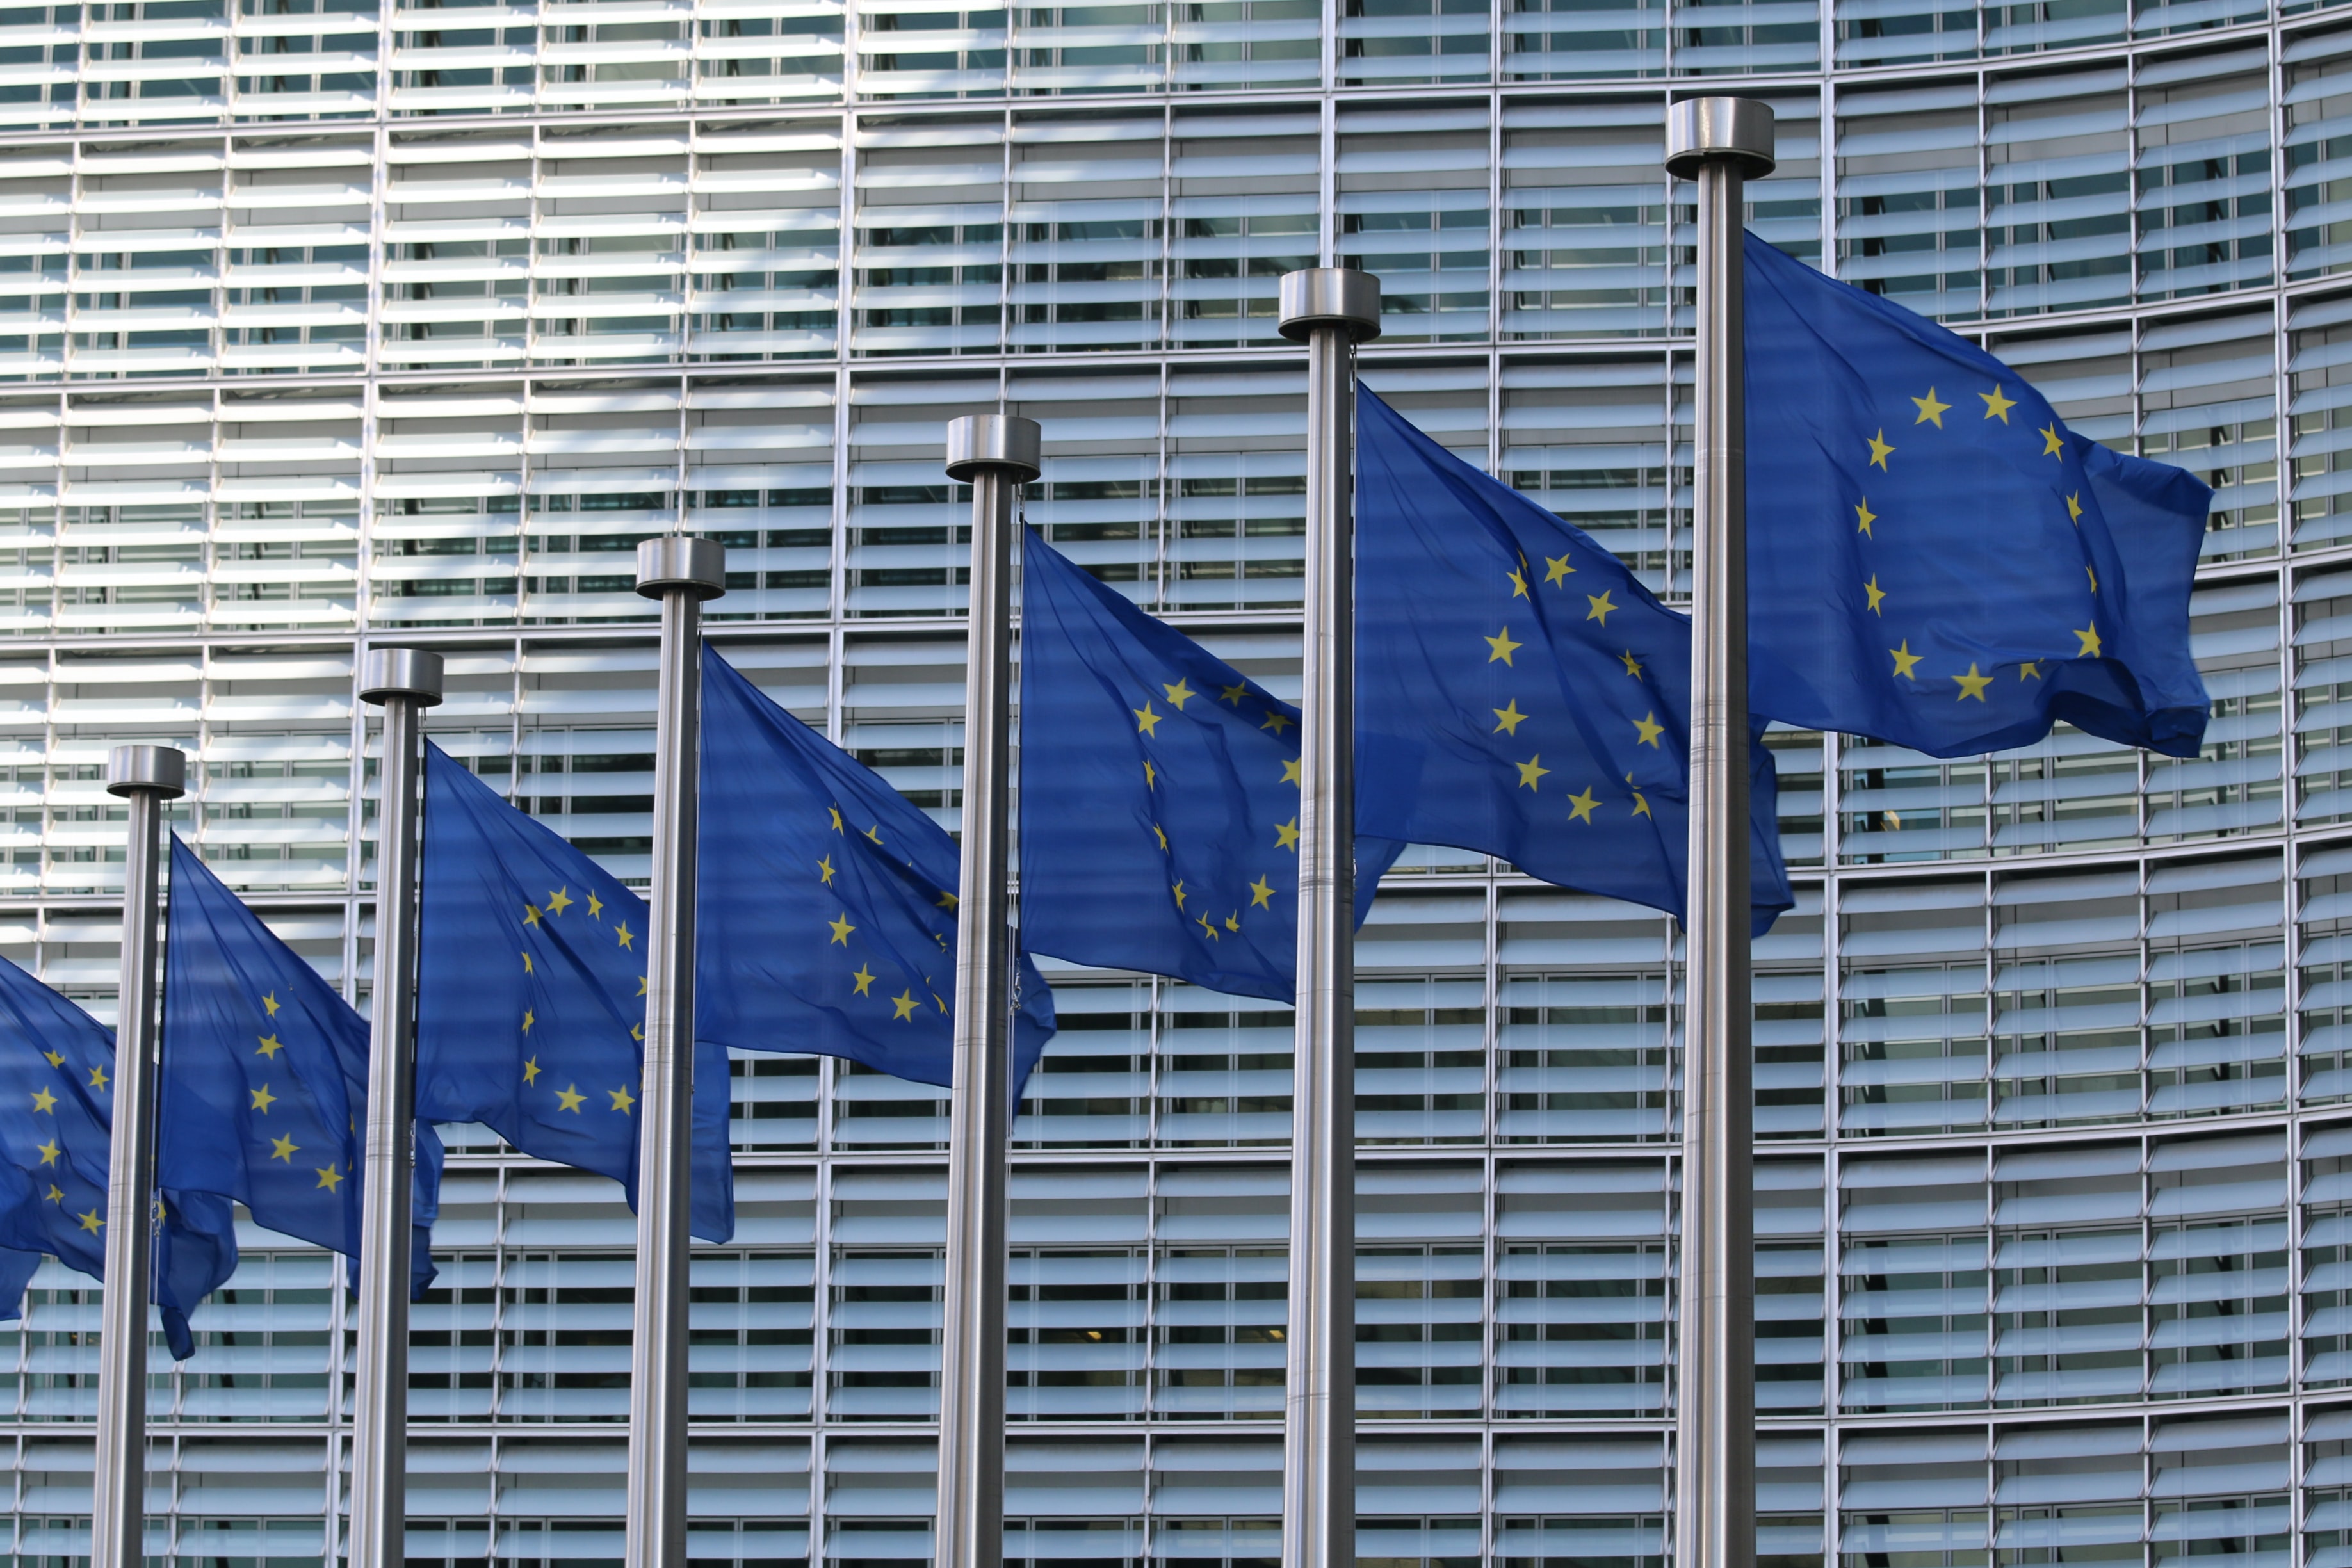 EU Fahnen vor der Kommission in Brüssel